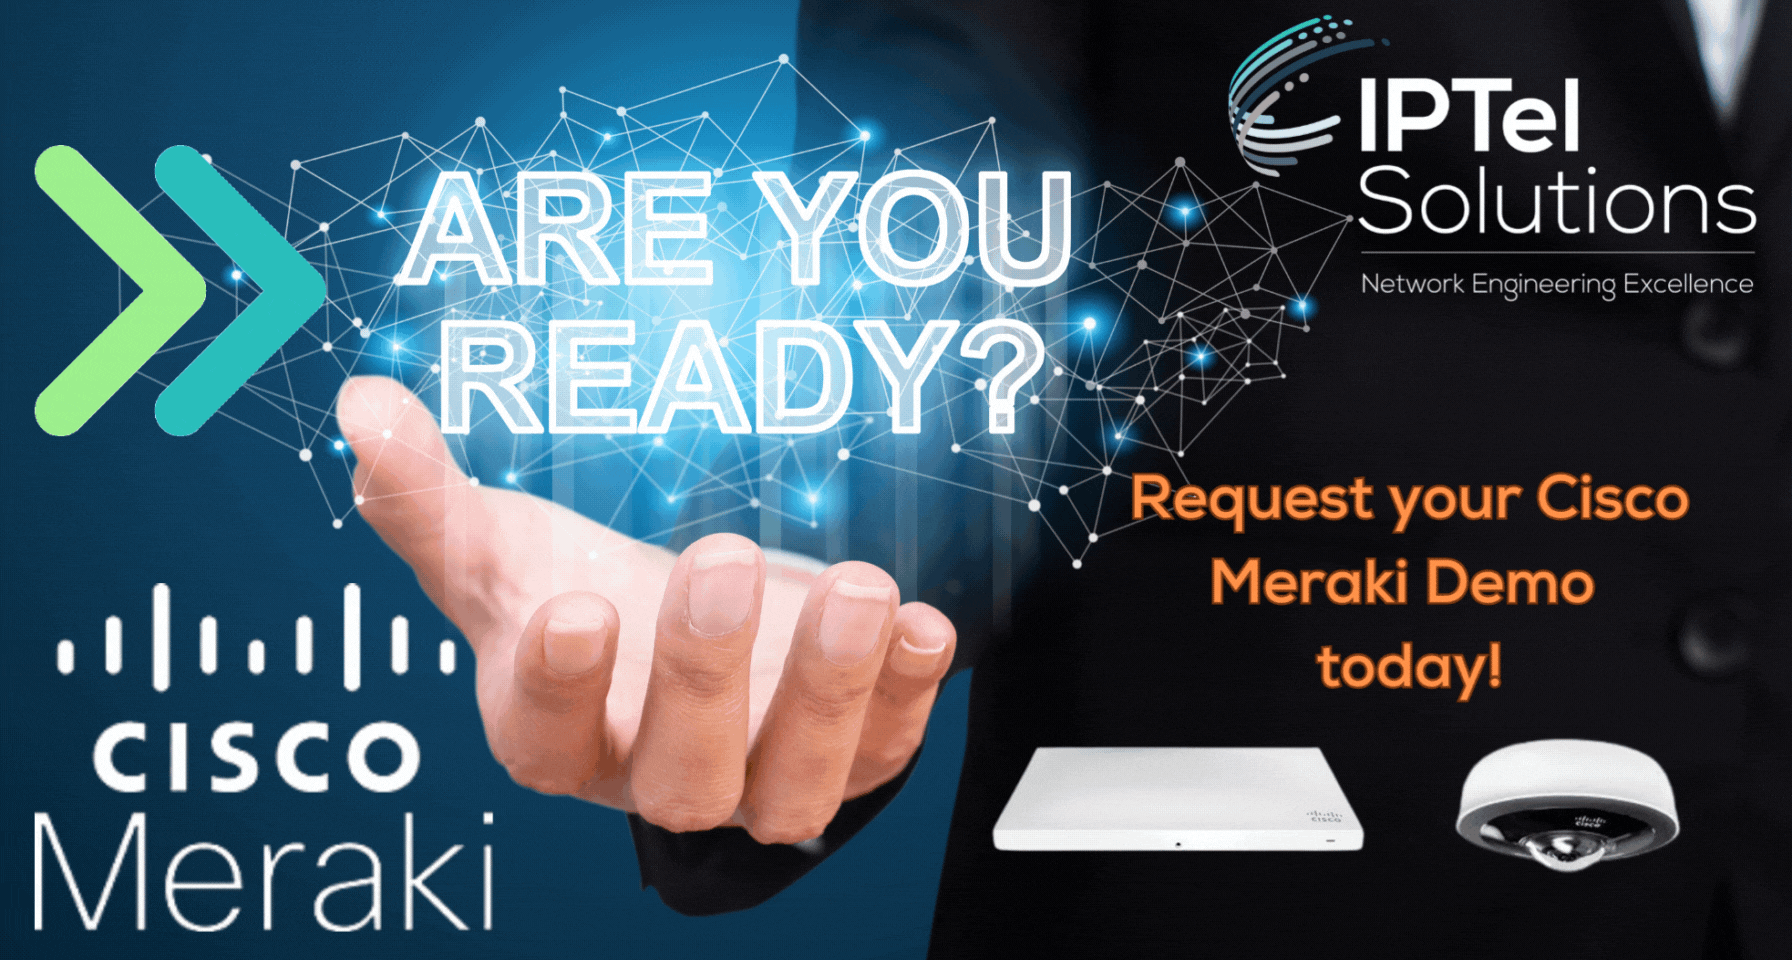 Request your Cisco Meraki Demo today!